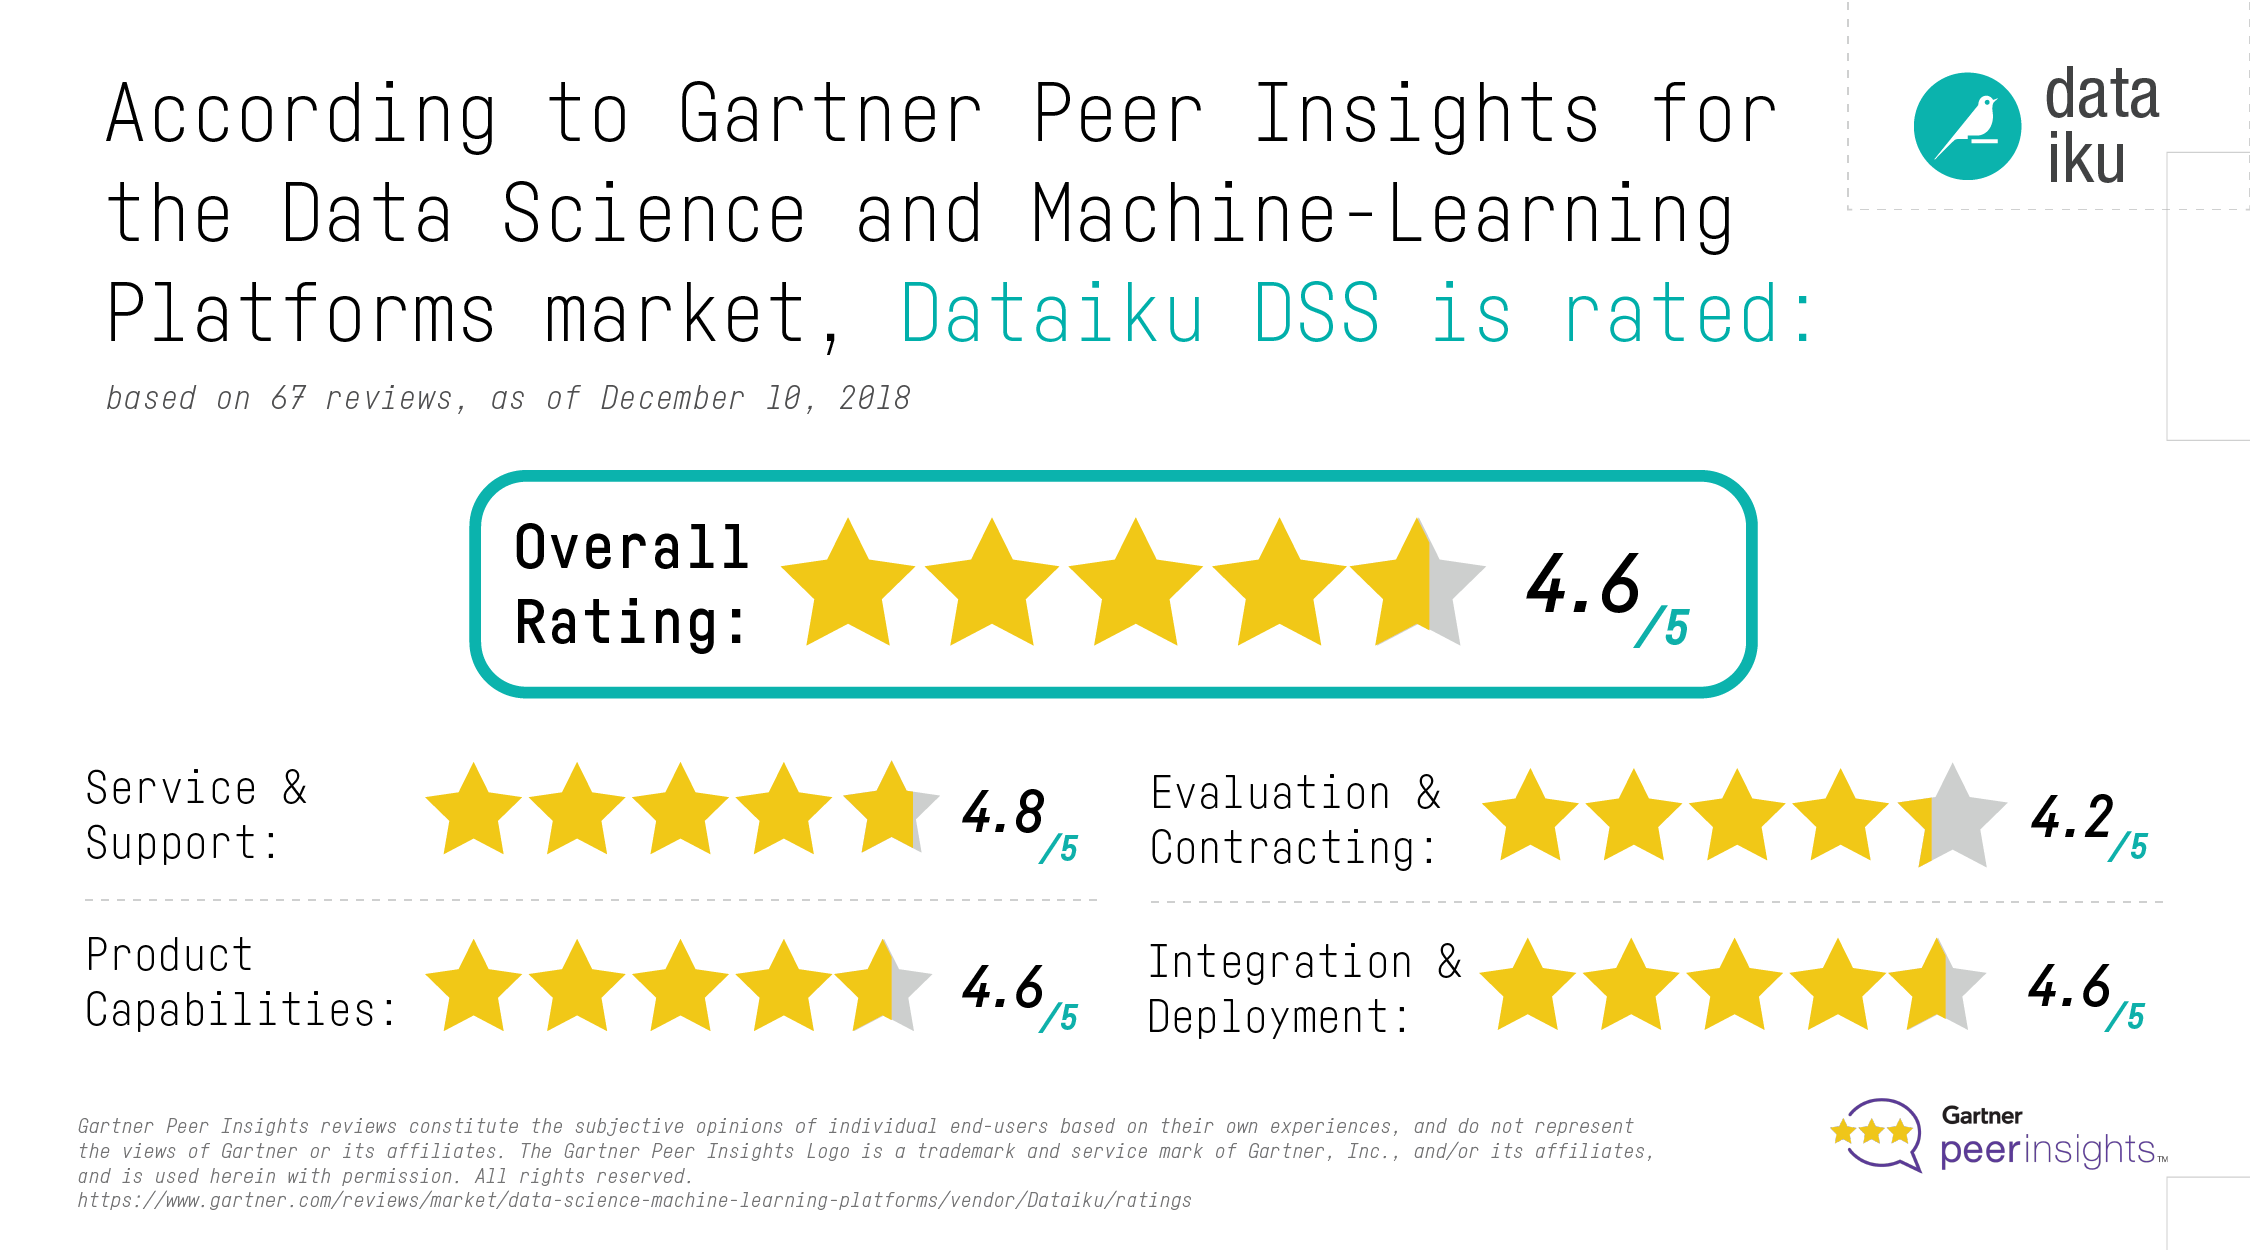 Dataiku's rating on Gartner Peer Insights 2018 for data science and ML platforms